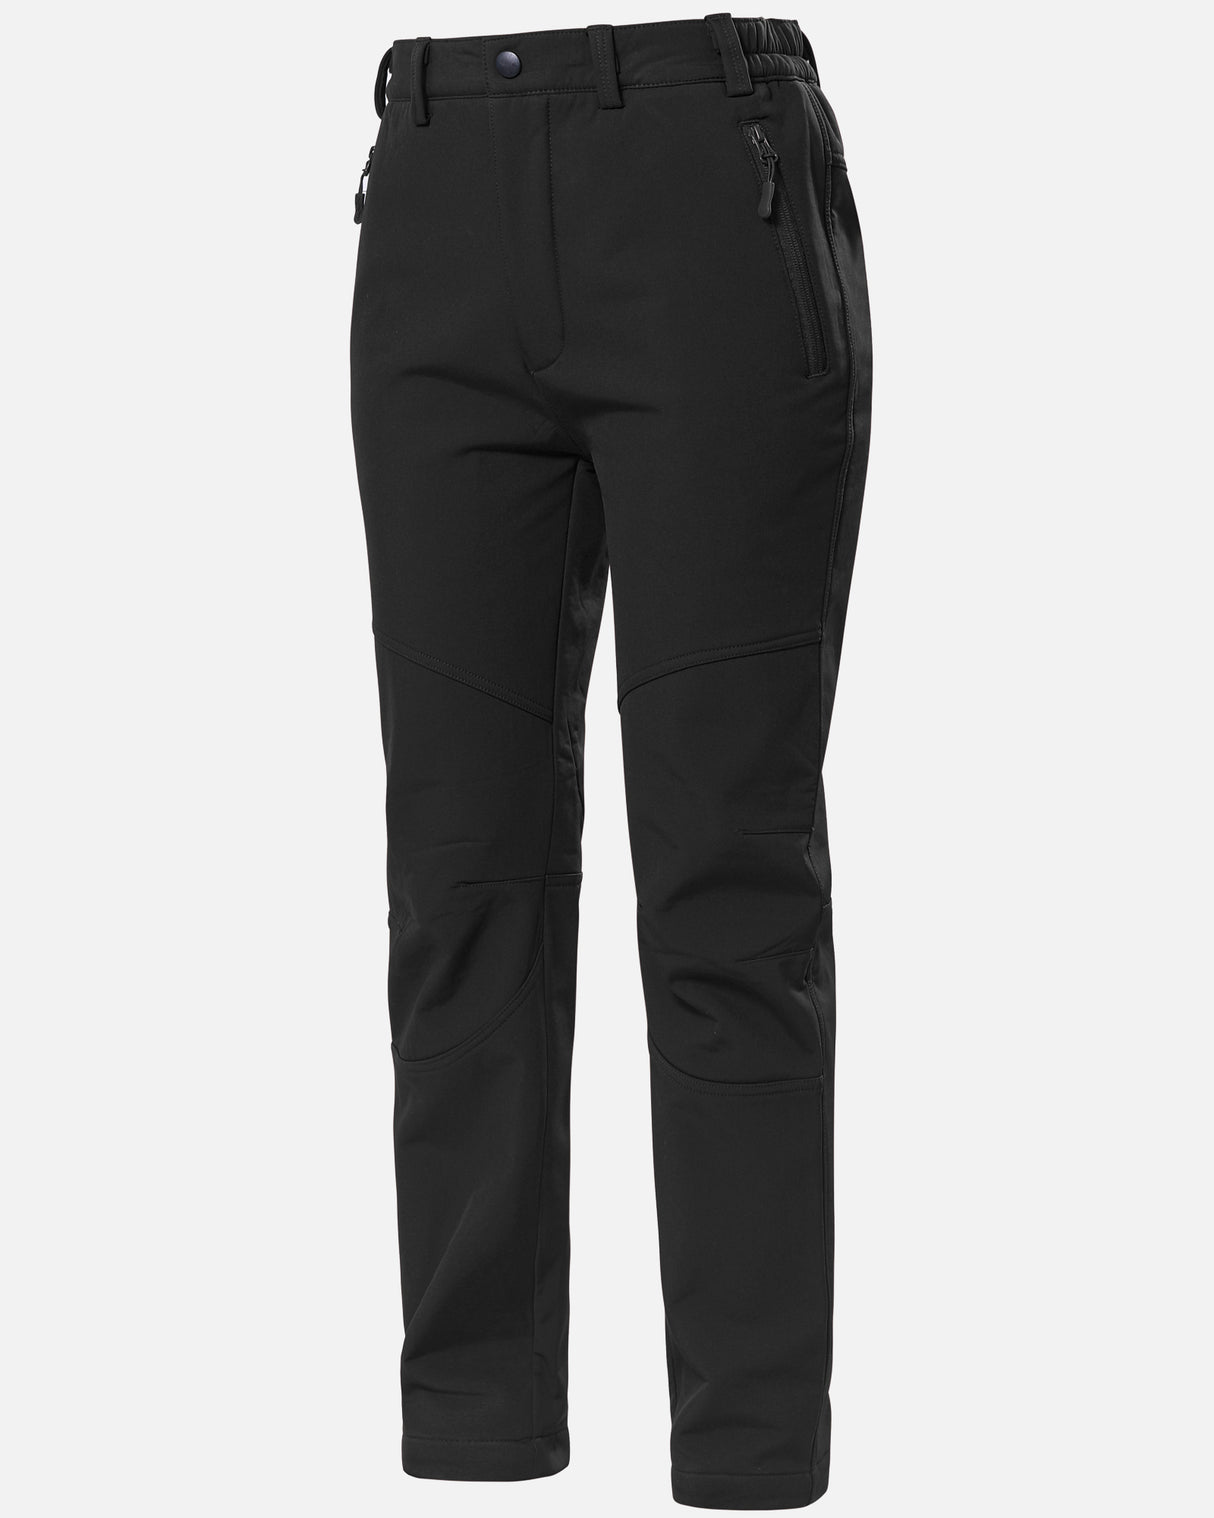 DEWBU® Men's Soft Shell Heated Pants with 12V Battery Pack Fleece Lined -  Black